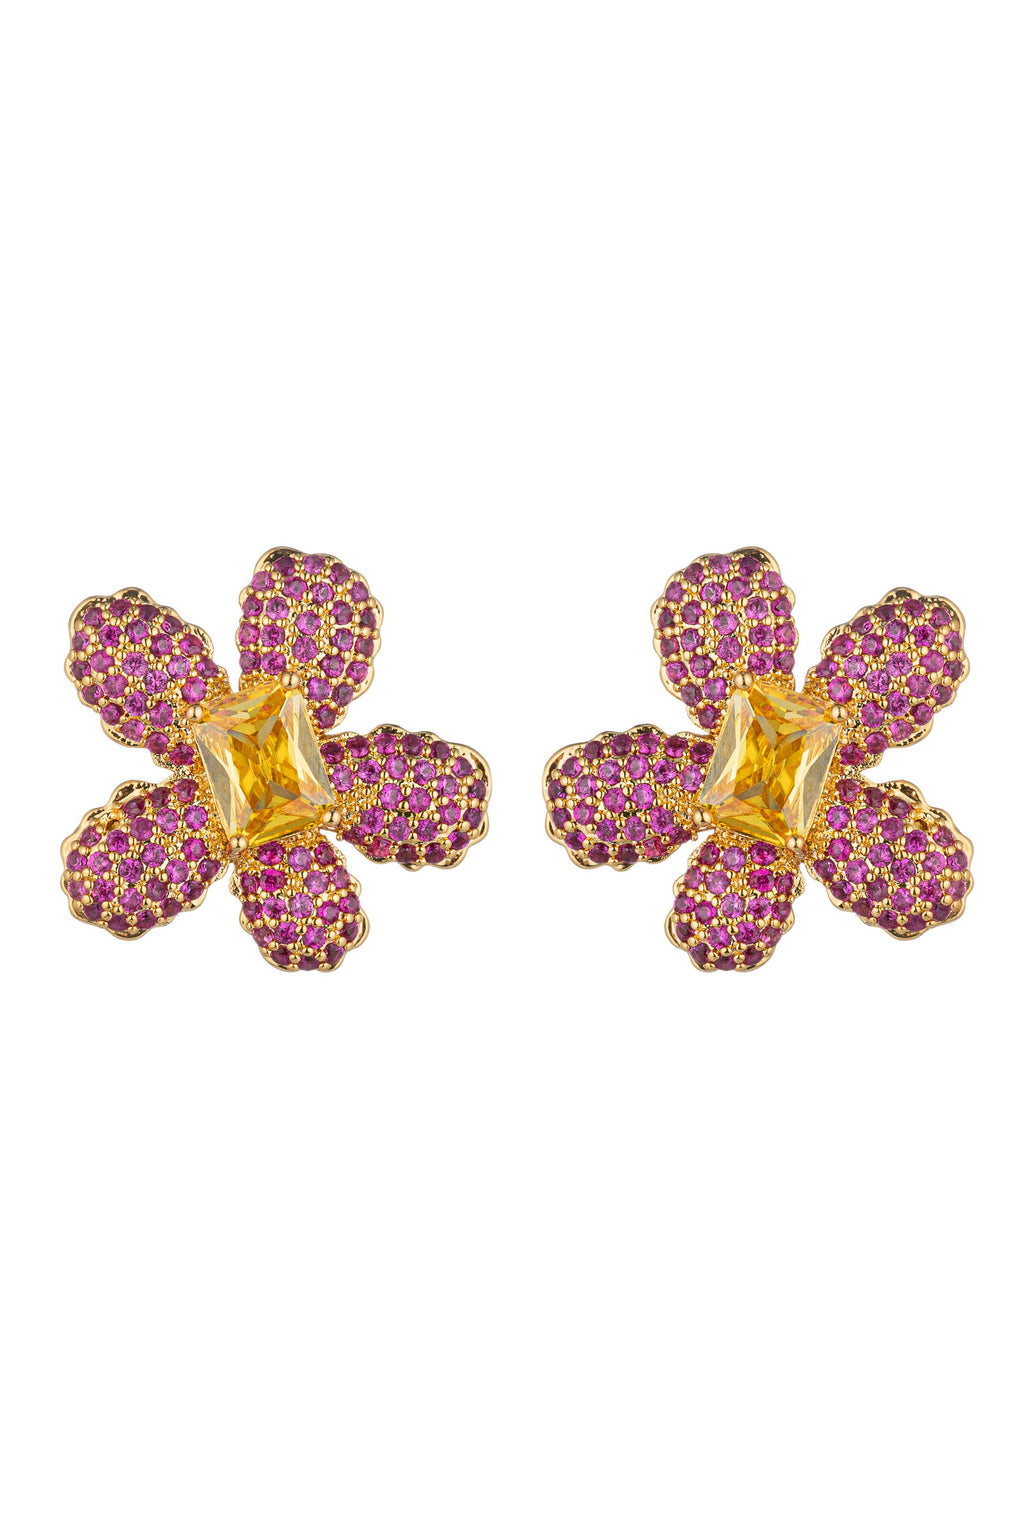 Jade Purple Cubic Zirconia Large Stud Earrings: Radiant Elegance in Every Glint.